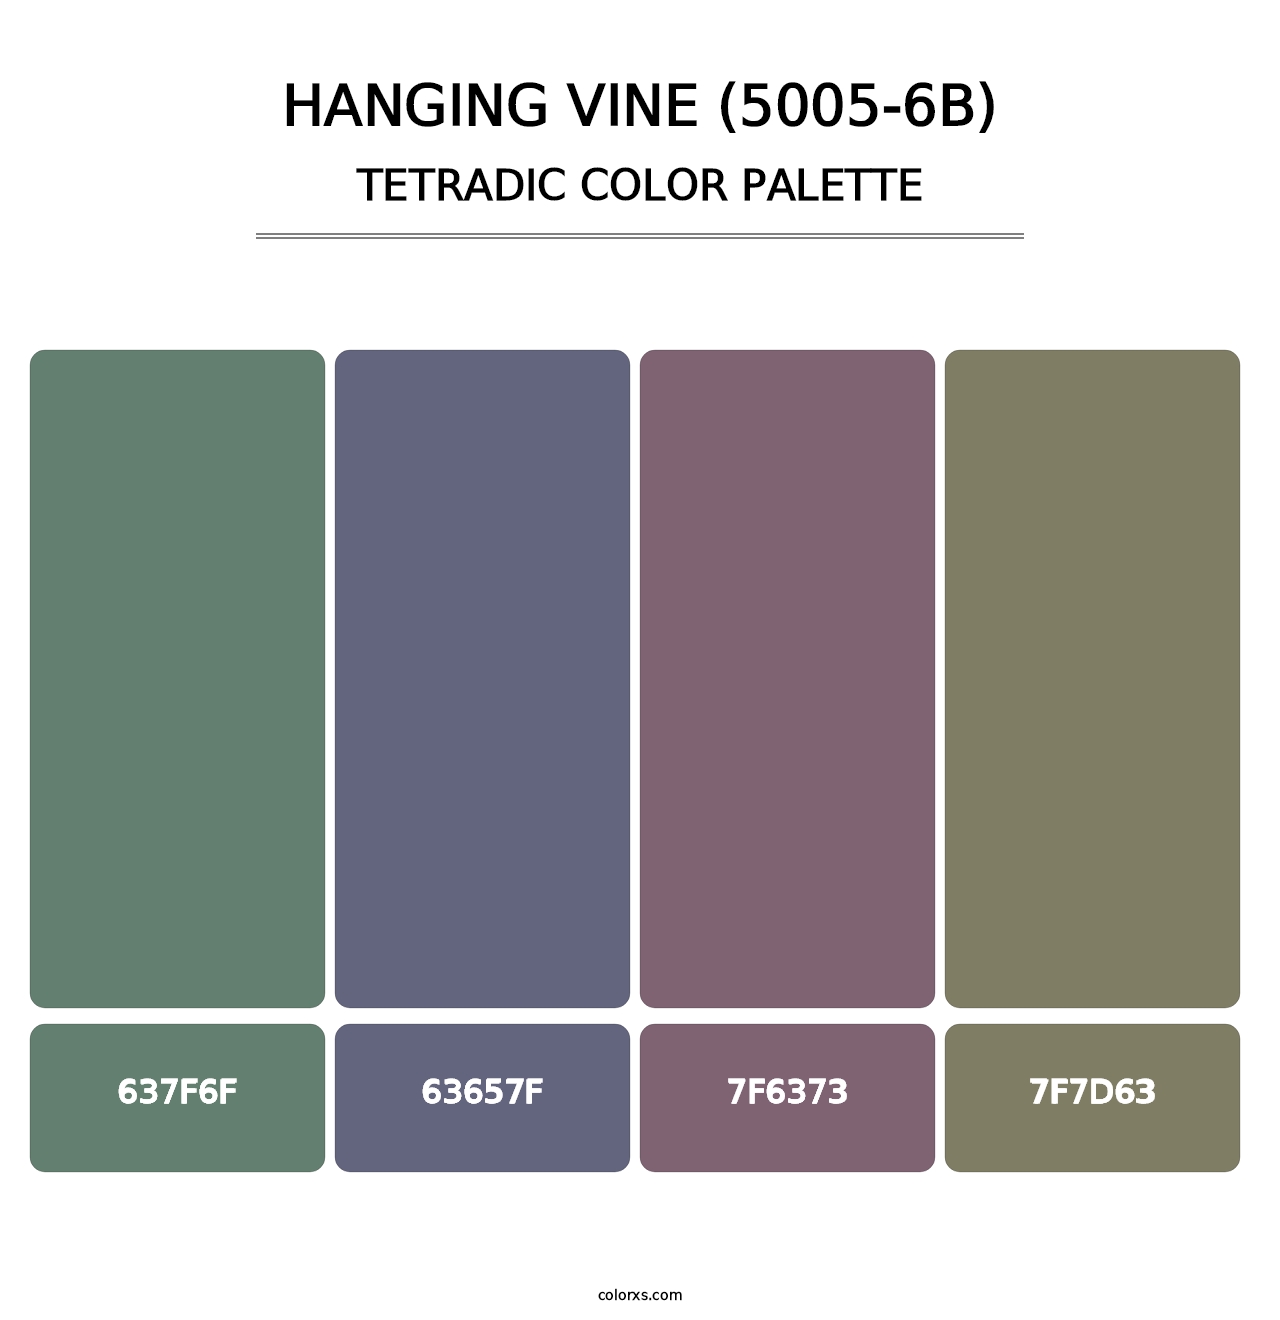 Hanging Vine (5005-6B) - Tetradic Color Palette